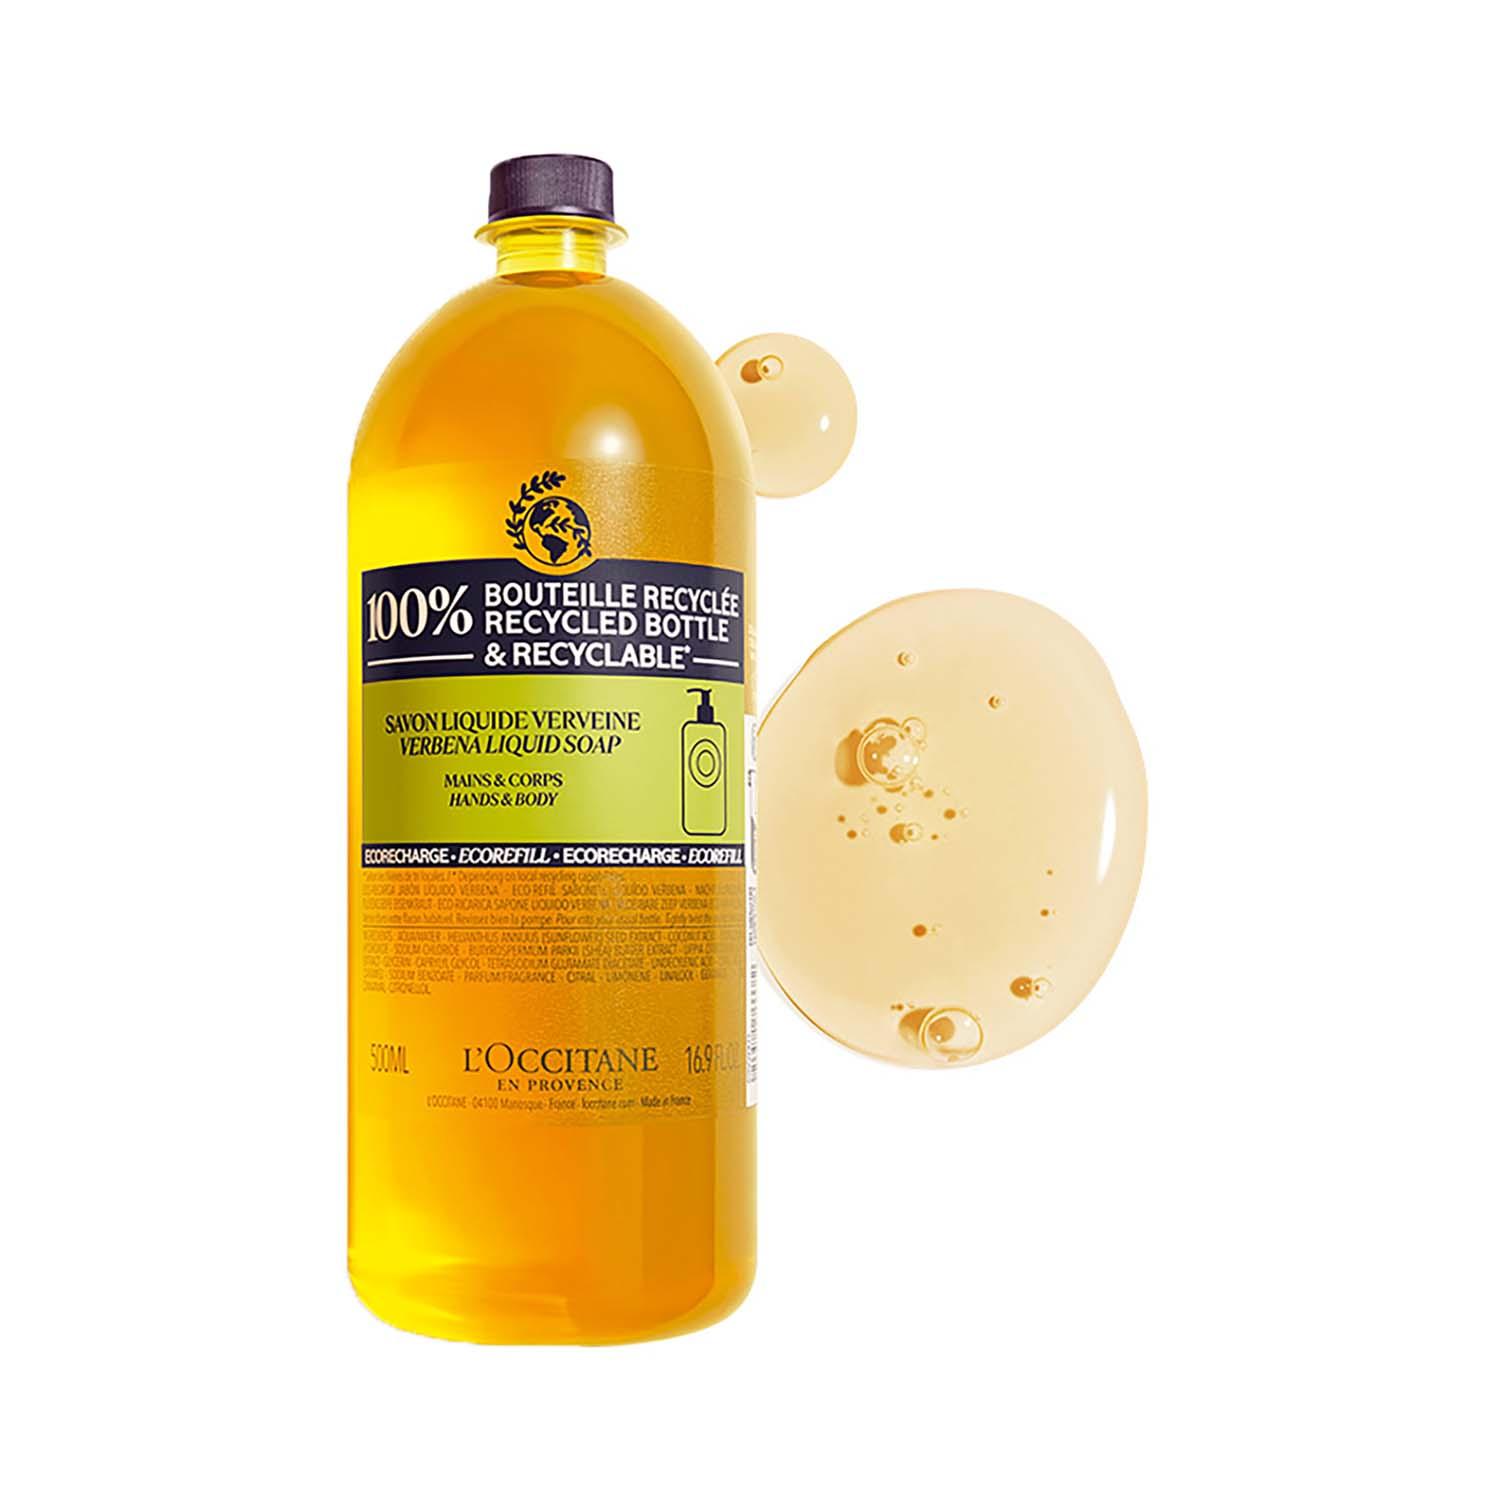 L'occitane | L'occitane Hands and Body Verbena Liquid Soap Refill (500 ml)